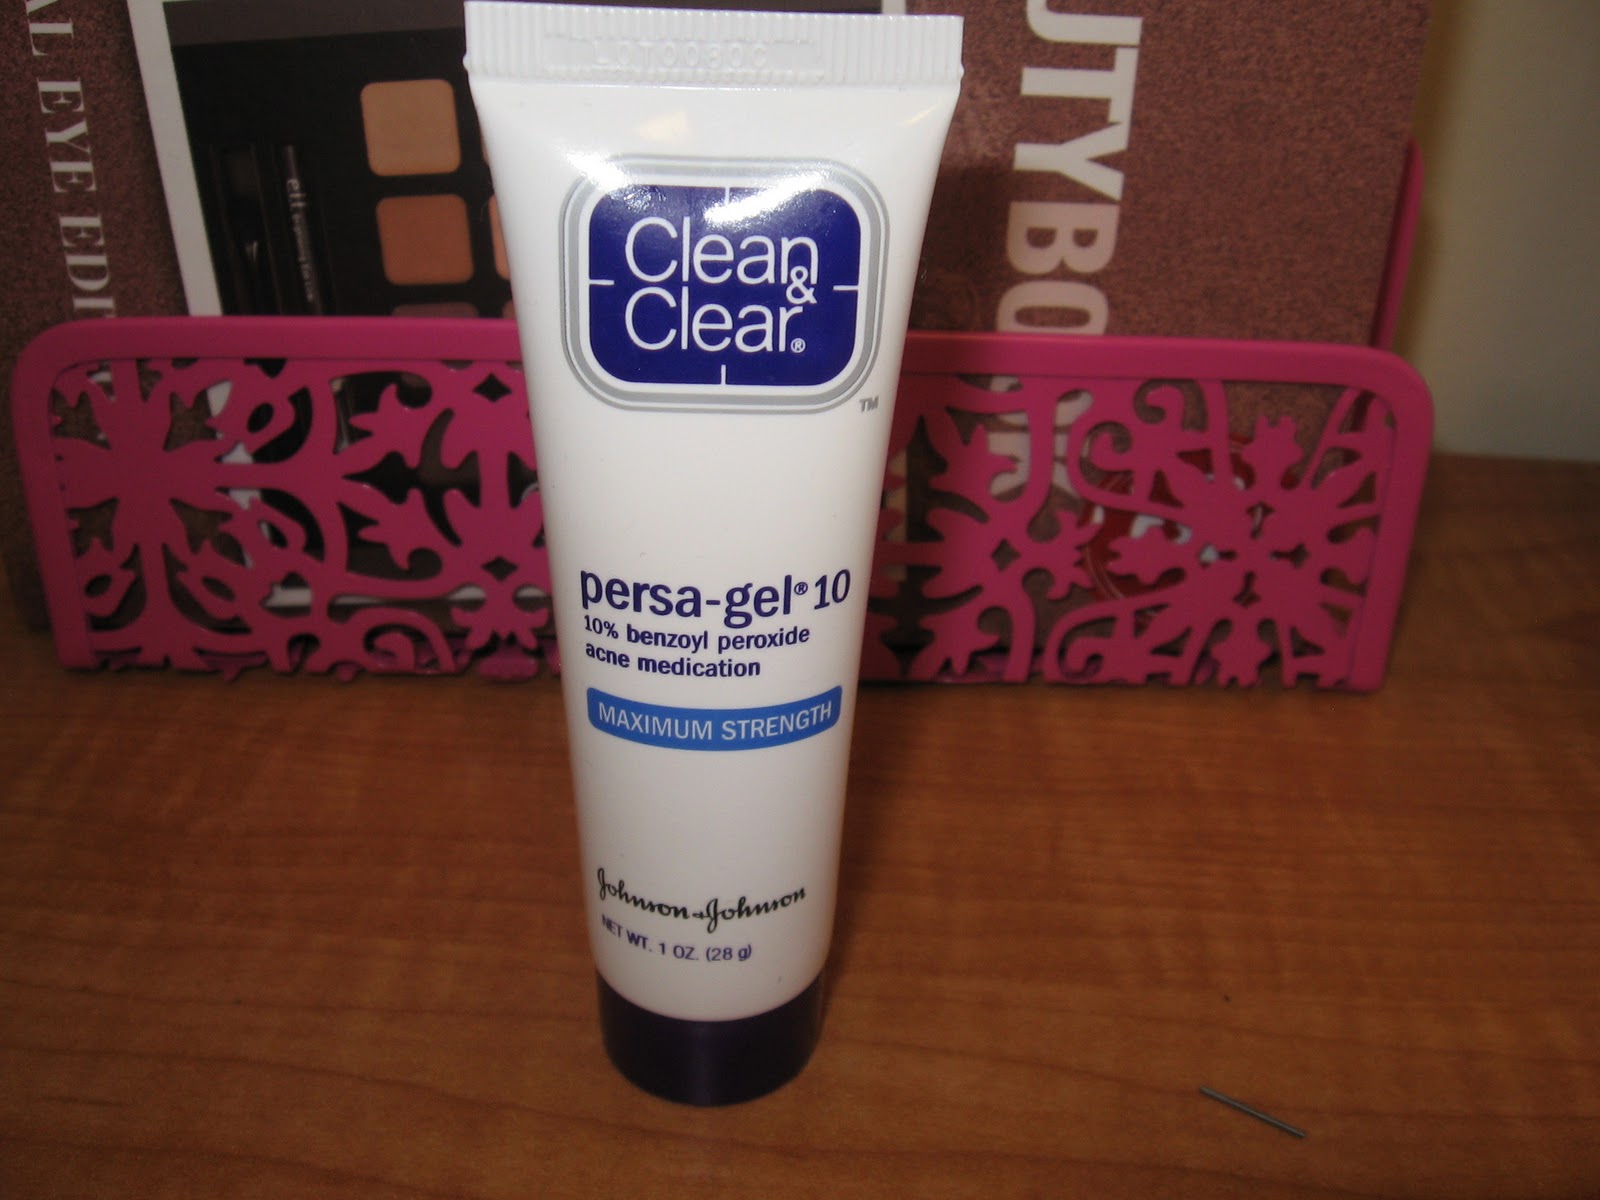 Clean Clear Persa-Gel Acne Medication